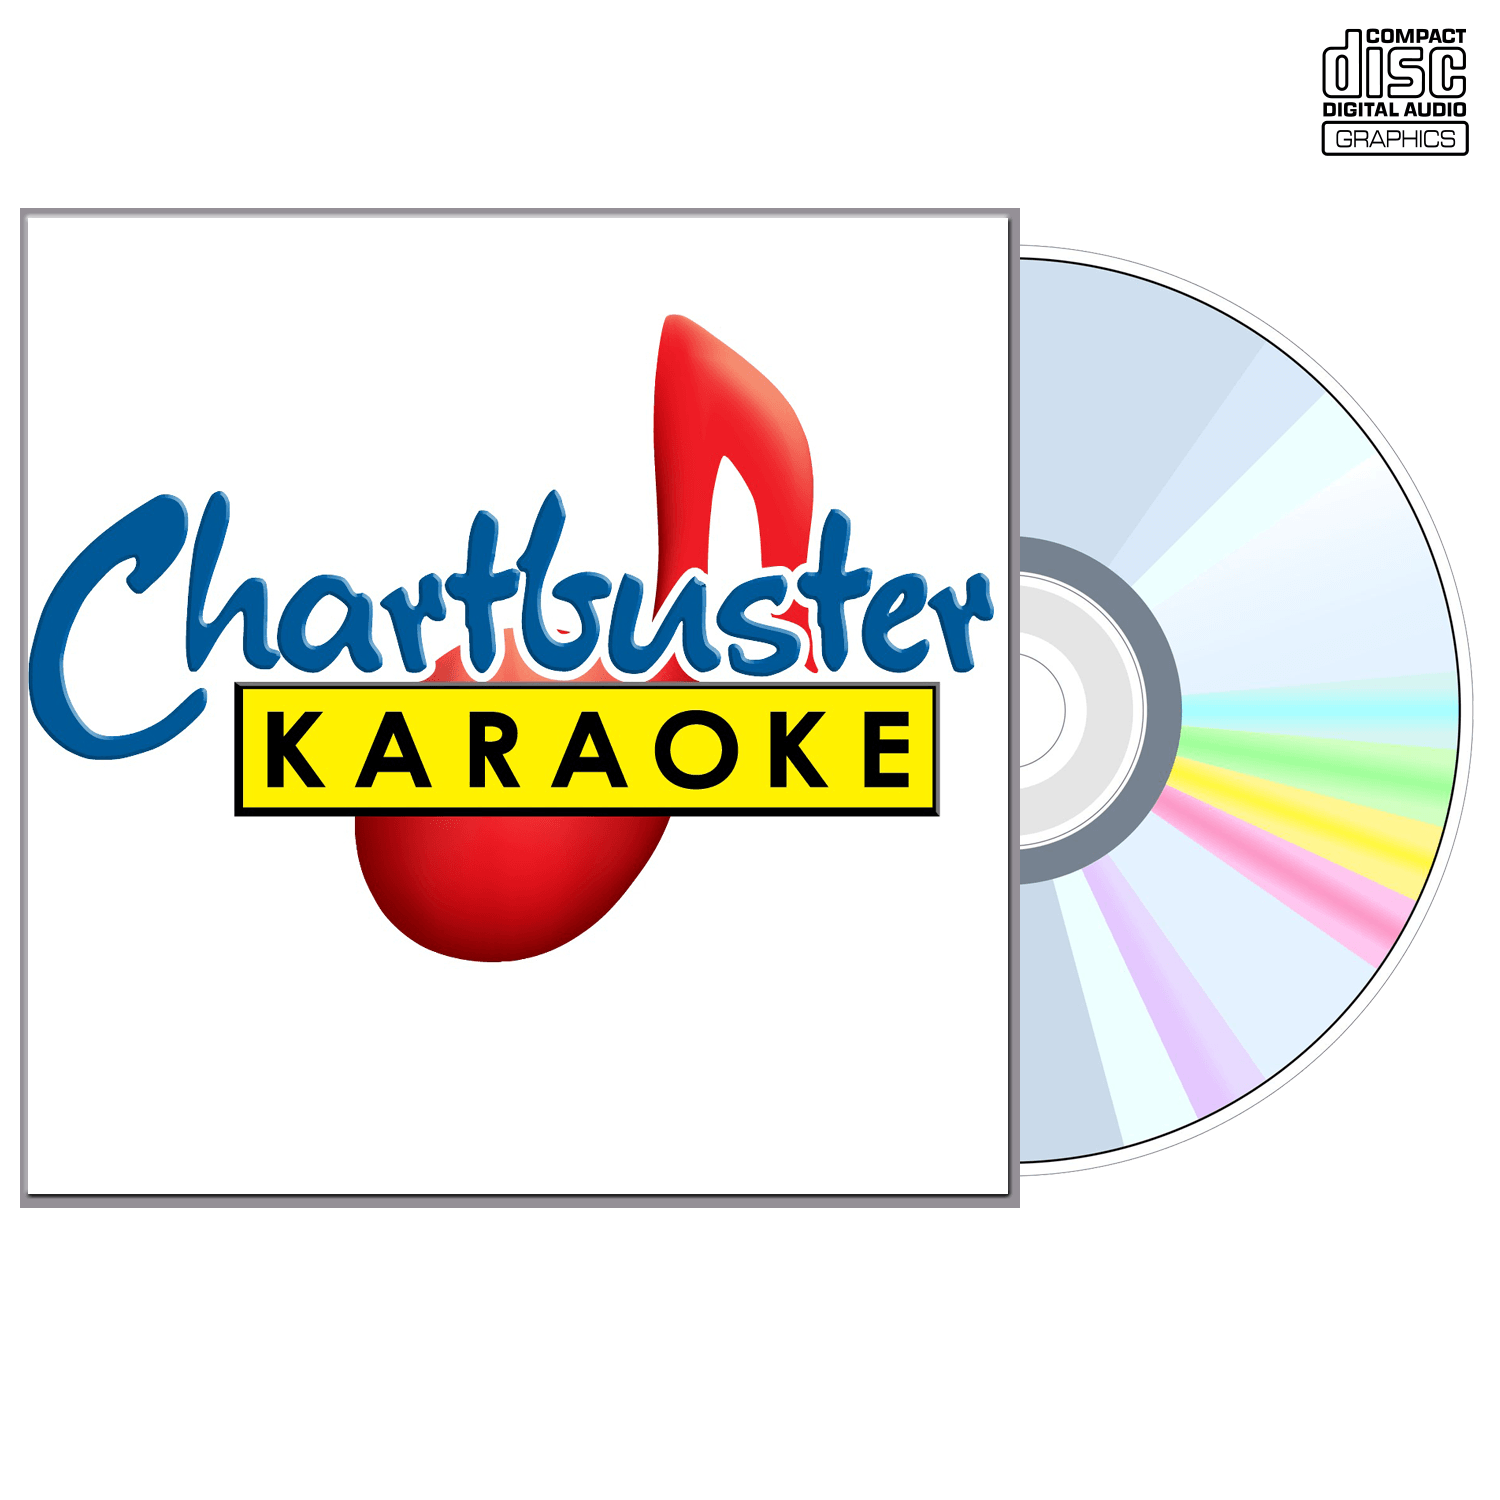 Sting - CD+G - Chartbuster Karaoke - Karaoke Home Entertainment